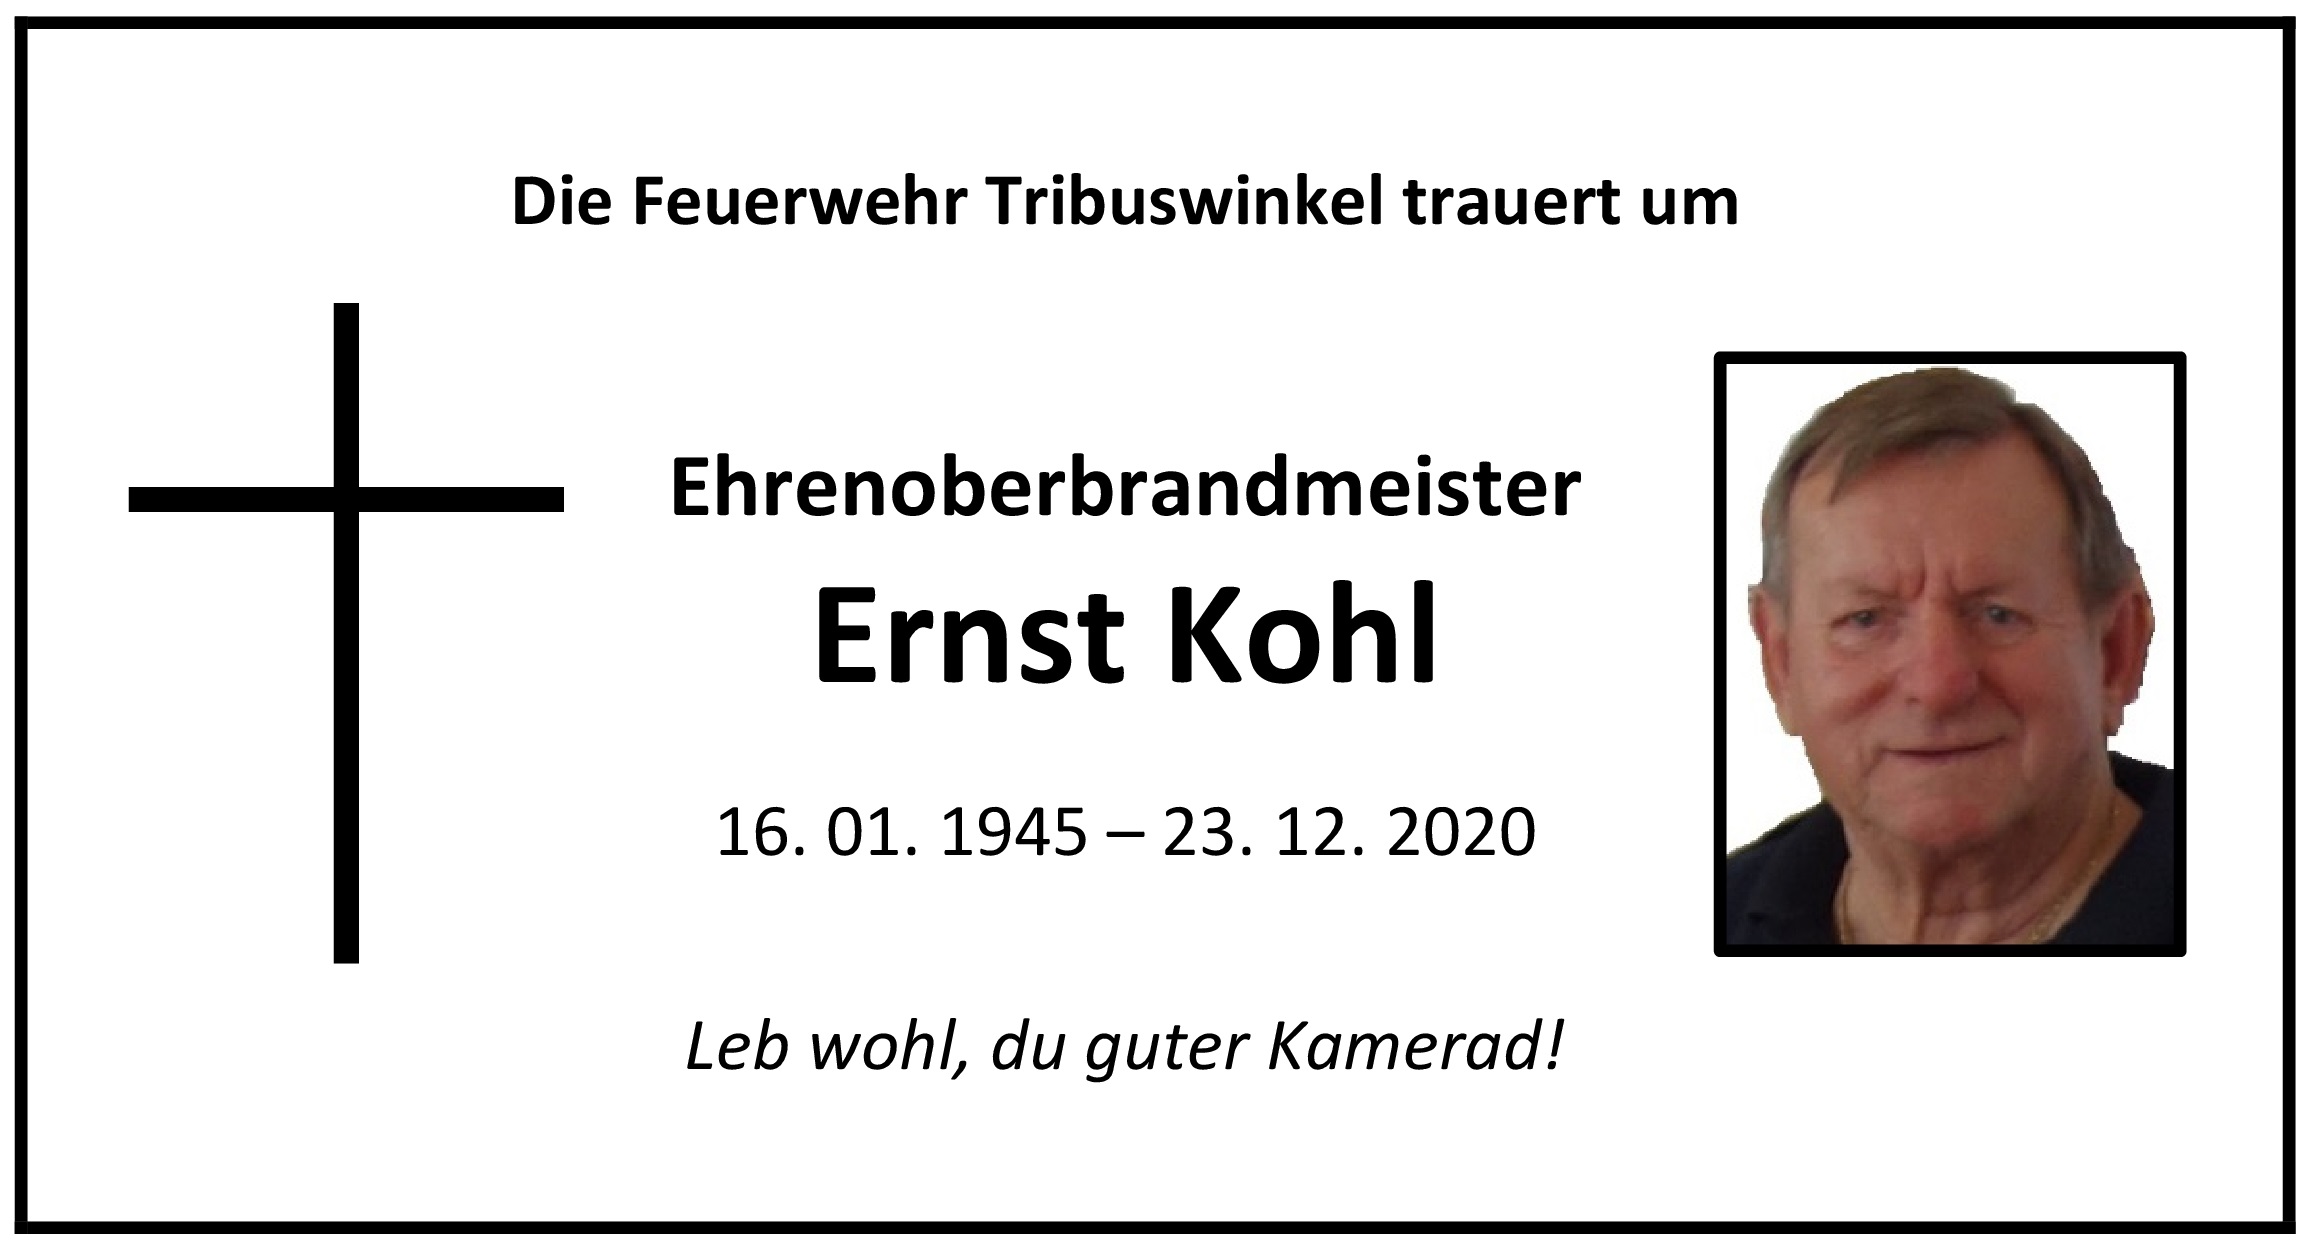 Ehrenoberbrandmeister Ernst Kohl †